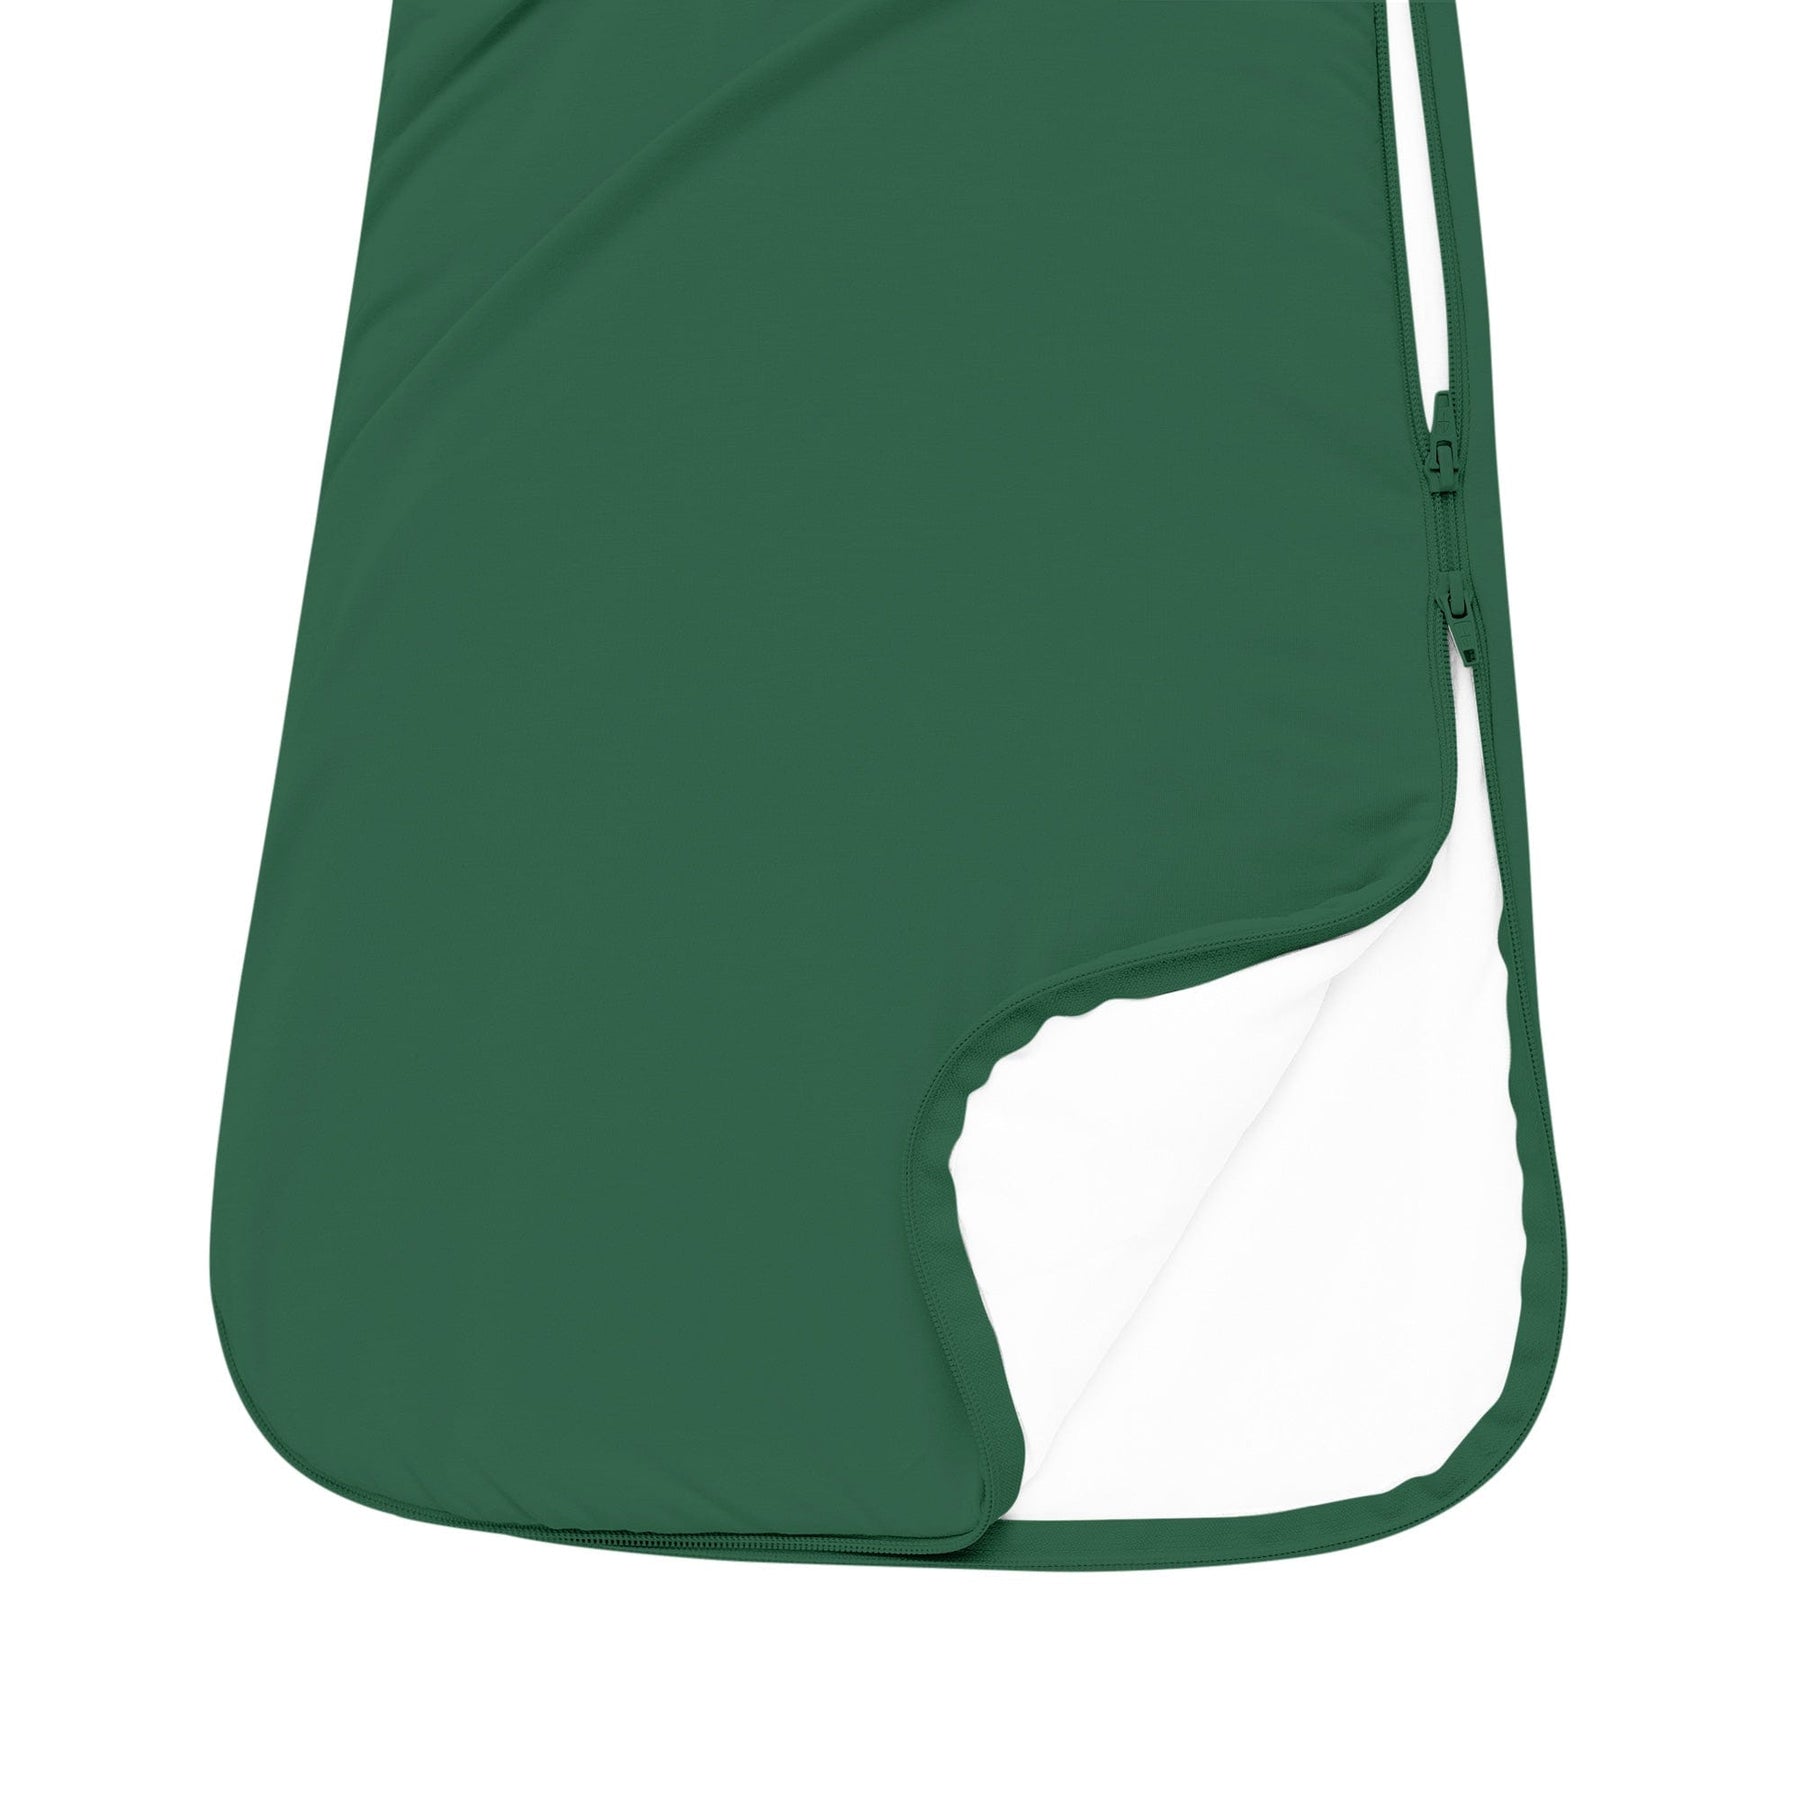 Kyte Baby Sleep Bag 1.0 Tog Sleep Bag in Forest 1.0